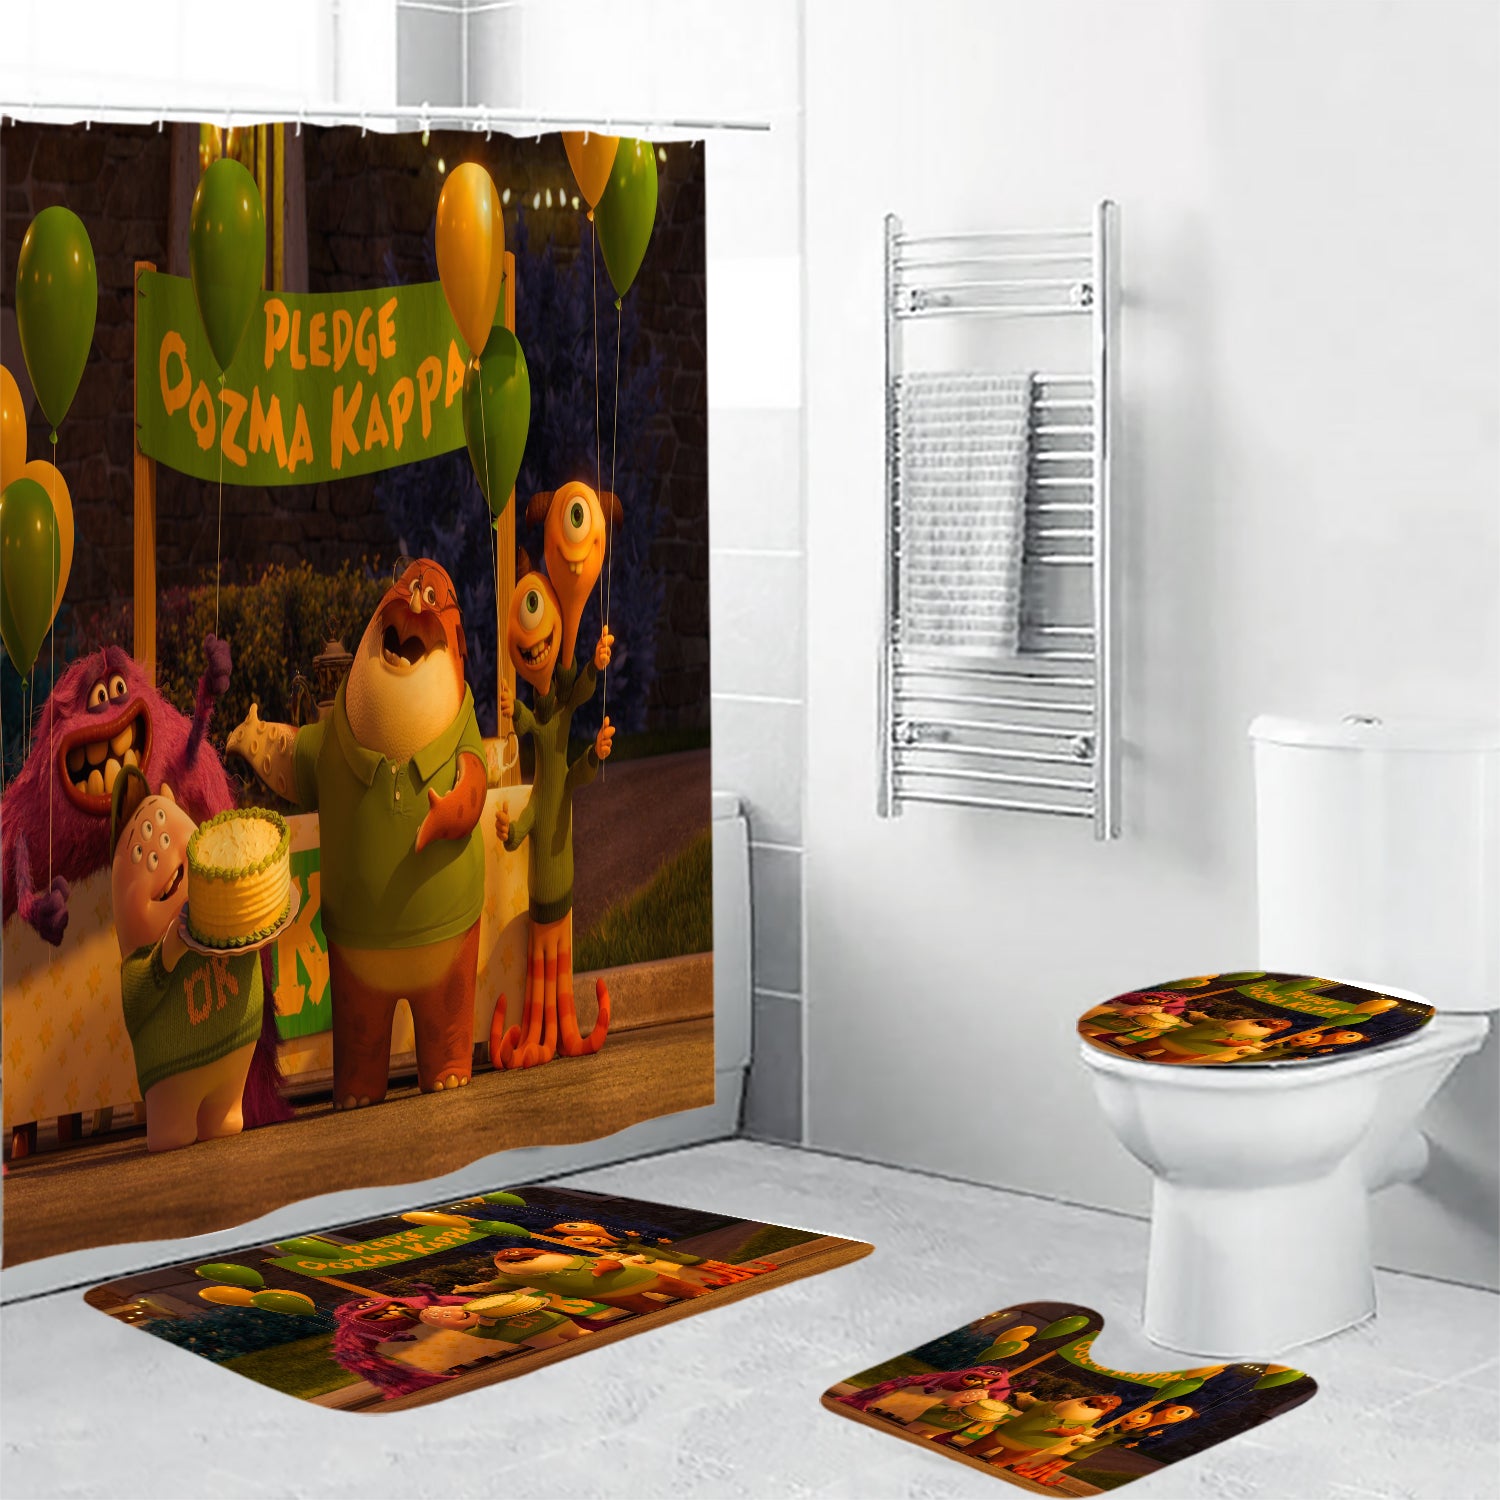 Characters v11 Monsters Inc Monsters University Movie Disney Pixar Waterproof Shower Curtain Non-Slip Toilet Lid Cover Bath Mat - Bathroom Set